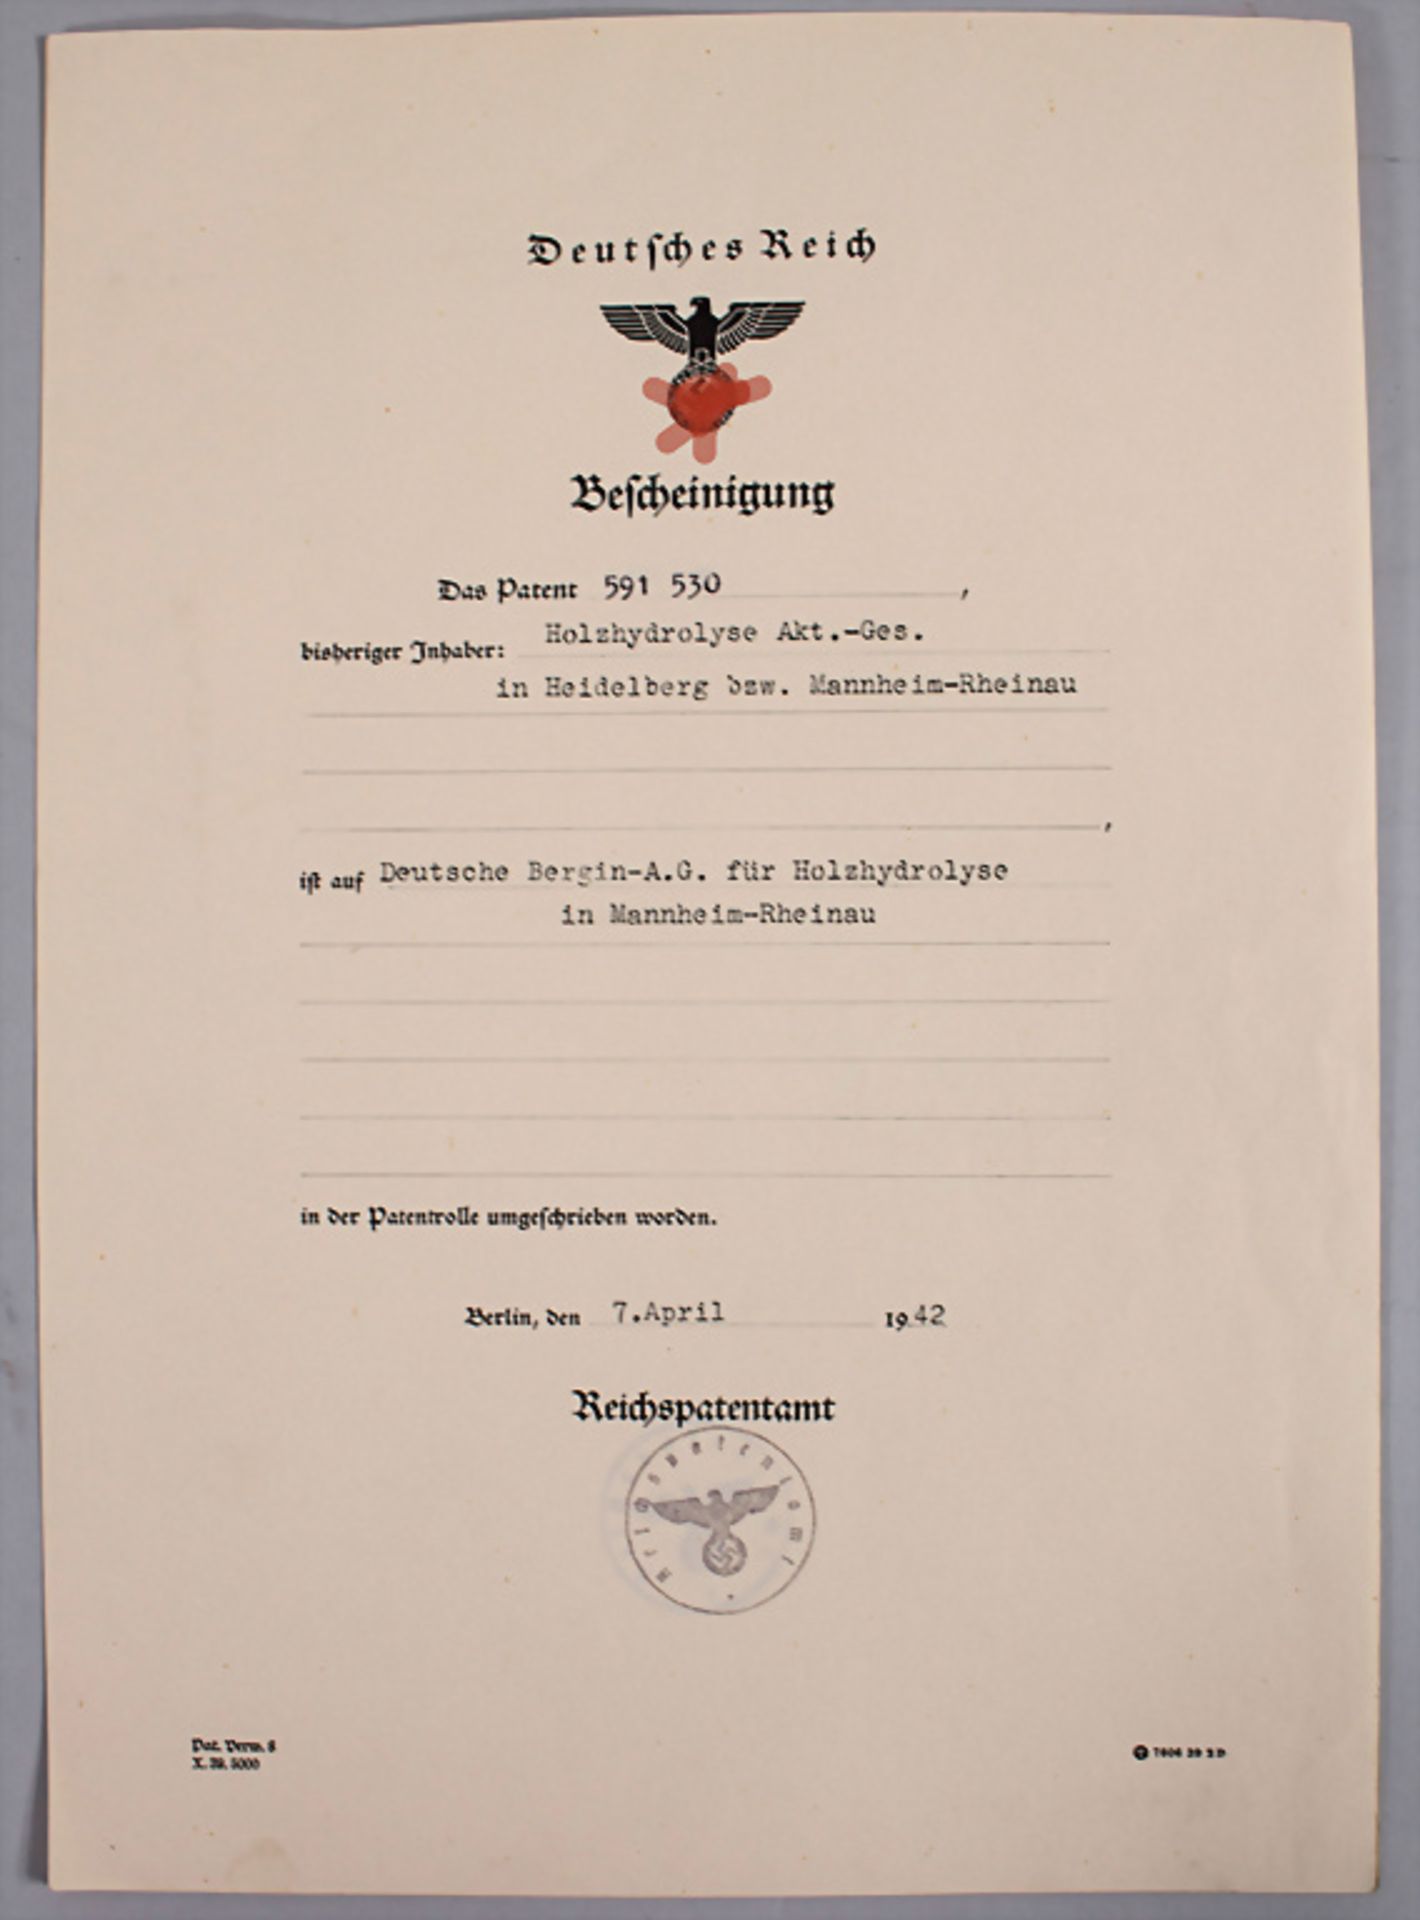 Patente der Holzhydrolyse Aktiengesellschaft Mannheim-Rheinau, um 1940 - Image 2 of 7